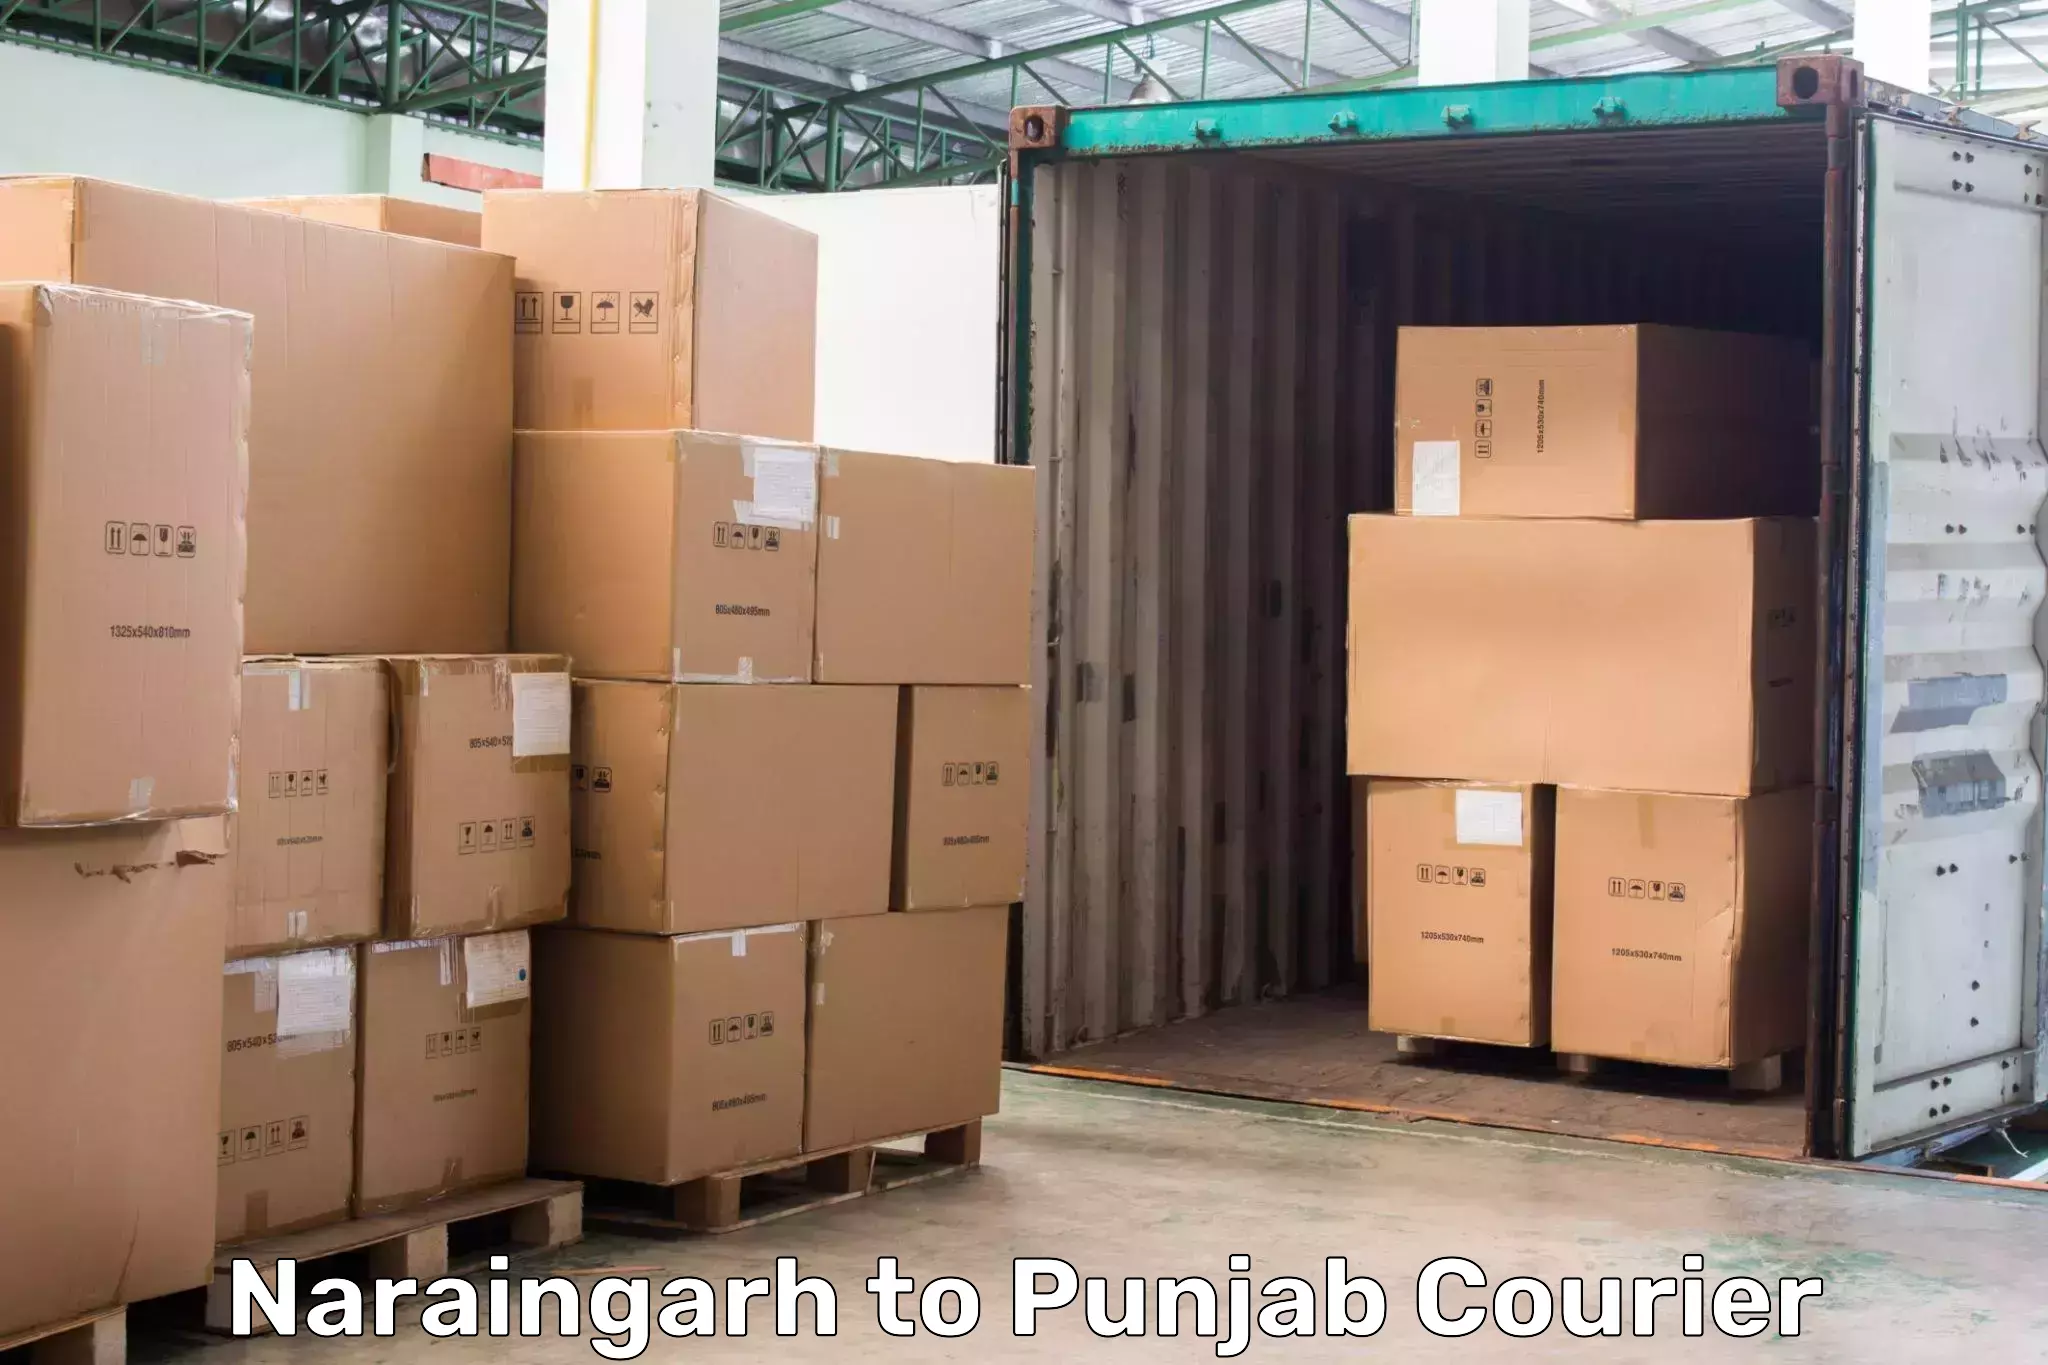 Express delivery capabilities Naraingarh to Talwara